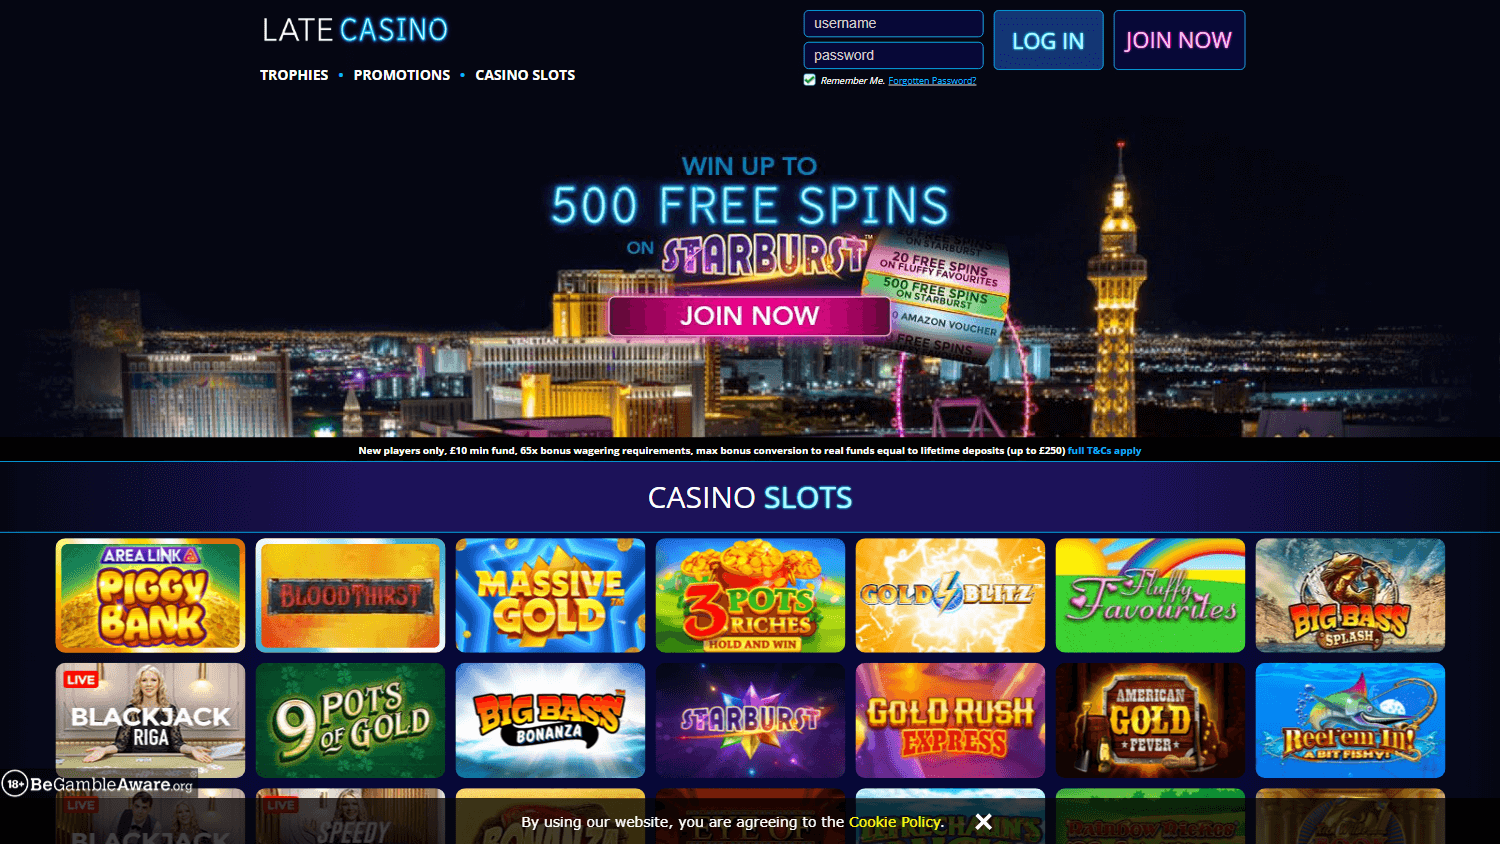 late_casino_homepage_desktop